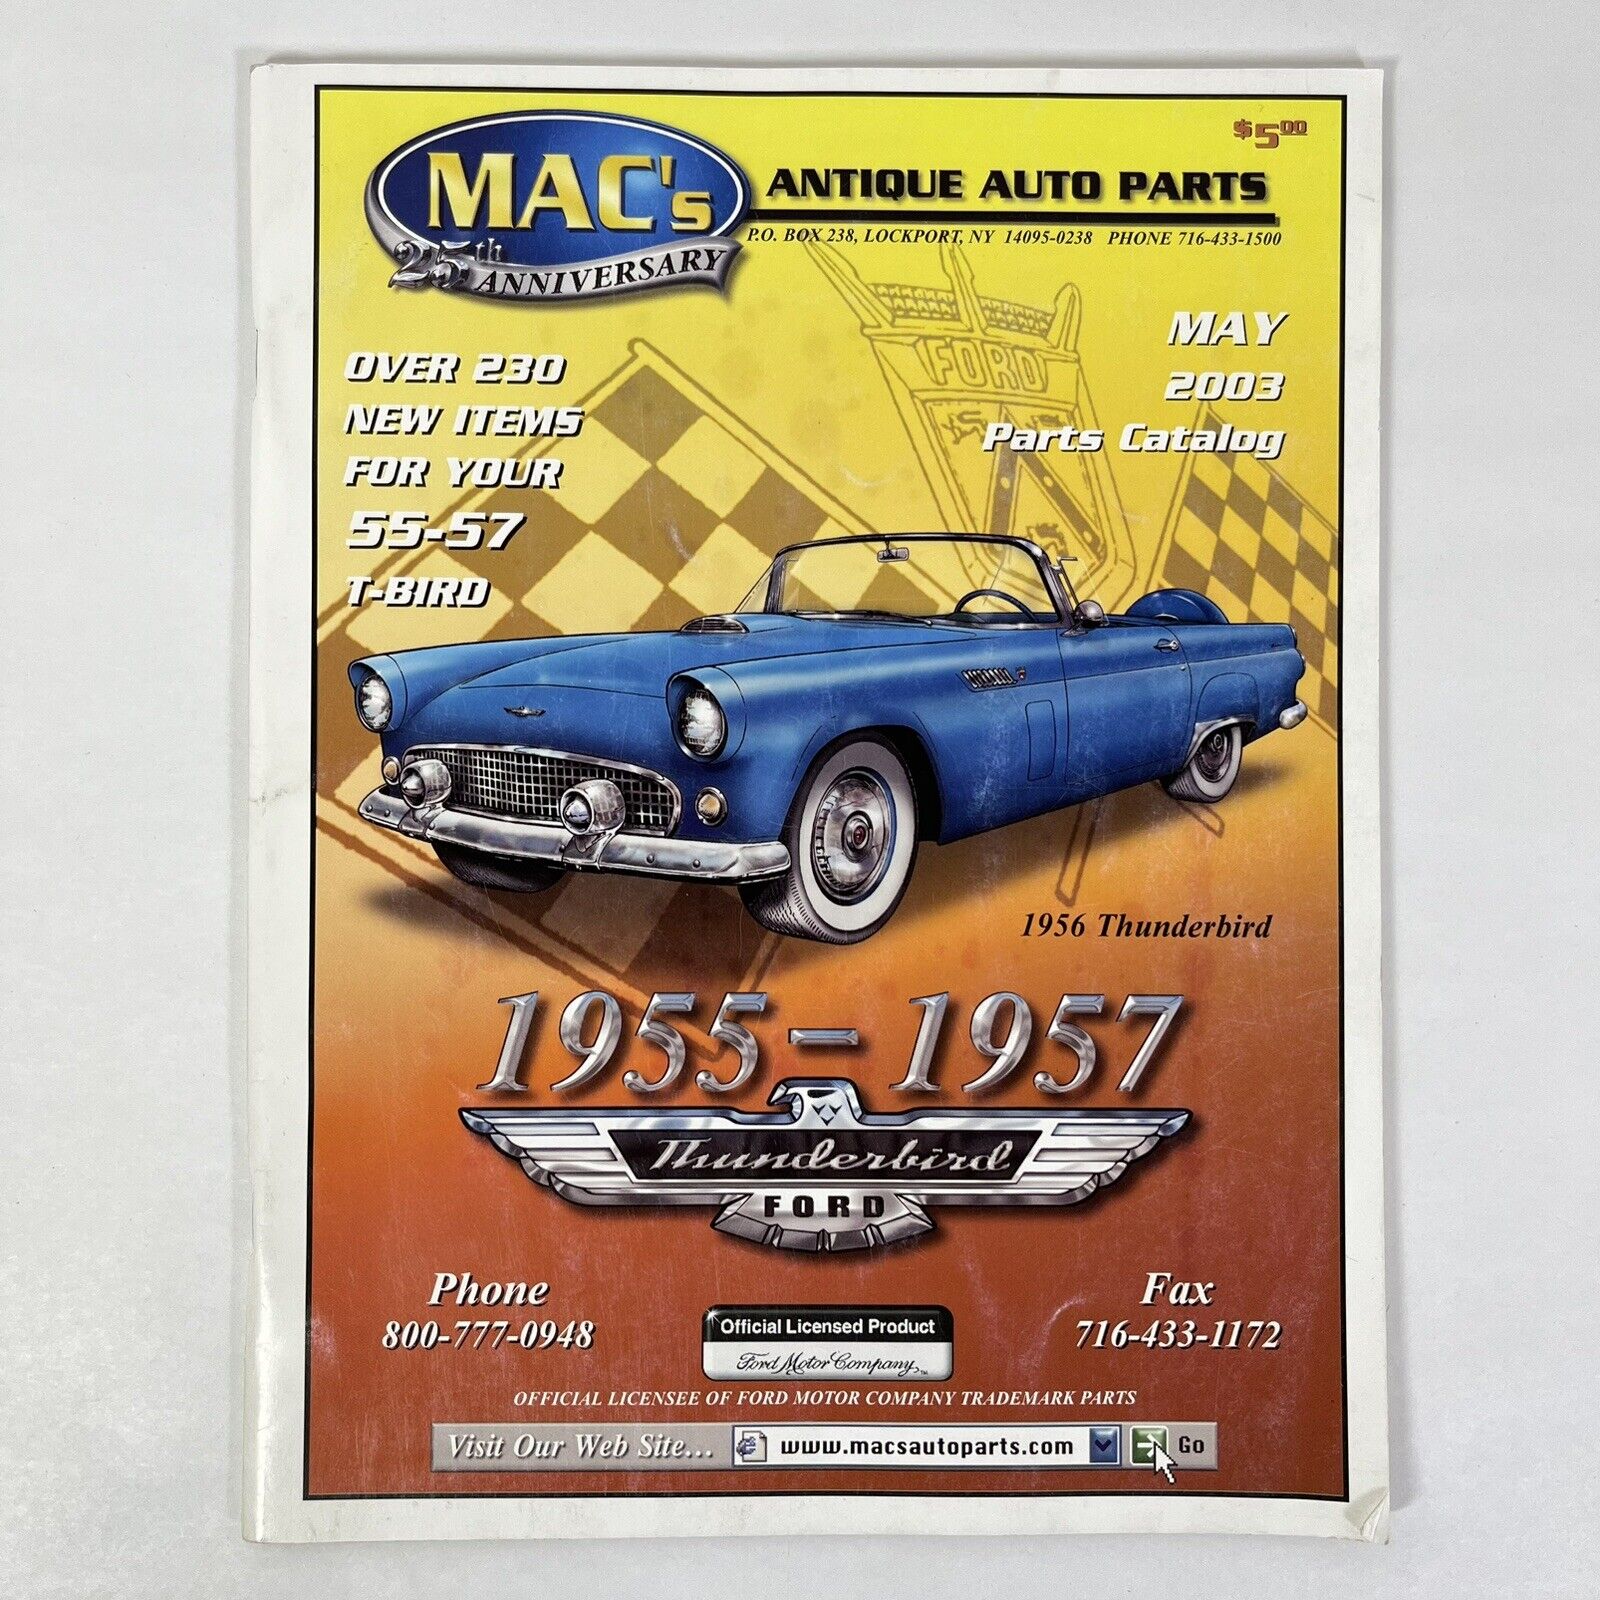 2003 MAC's Antique Auto Parts Catalog - for 1955-1957 Ford THUNDERBIRD